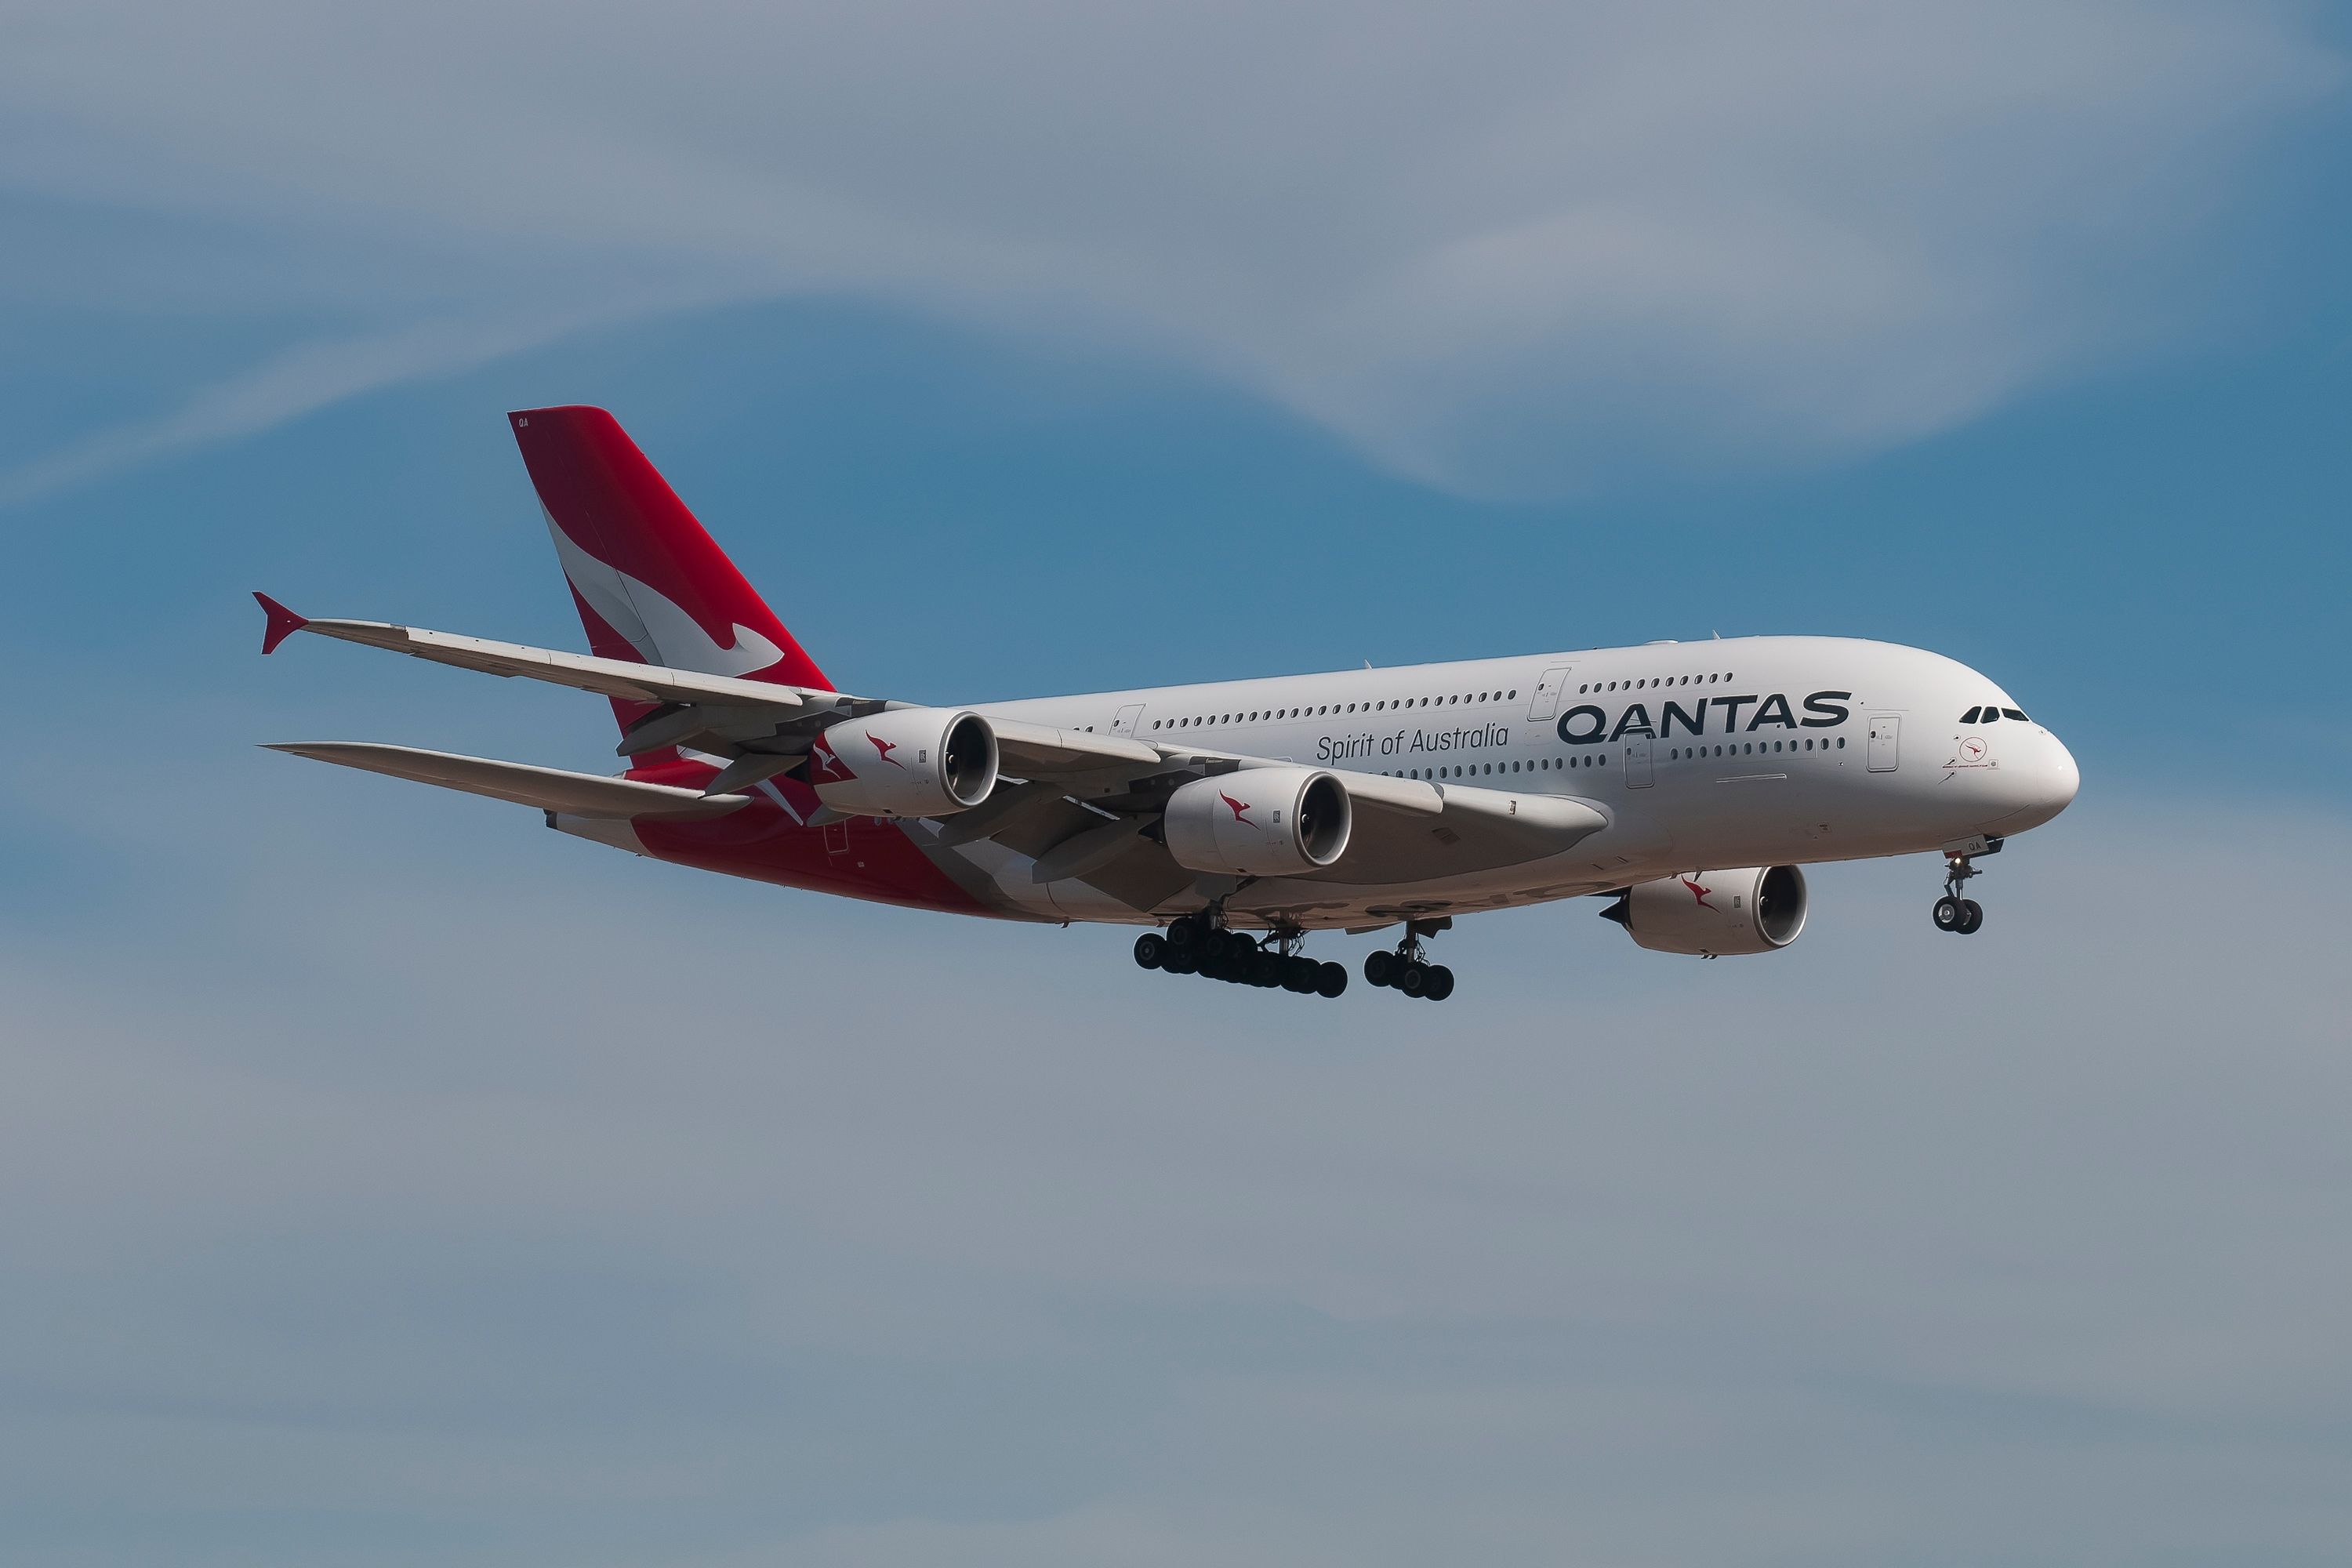 Qantas Airbus A380 Landing In Dallas